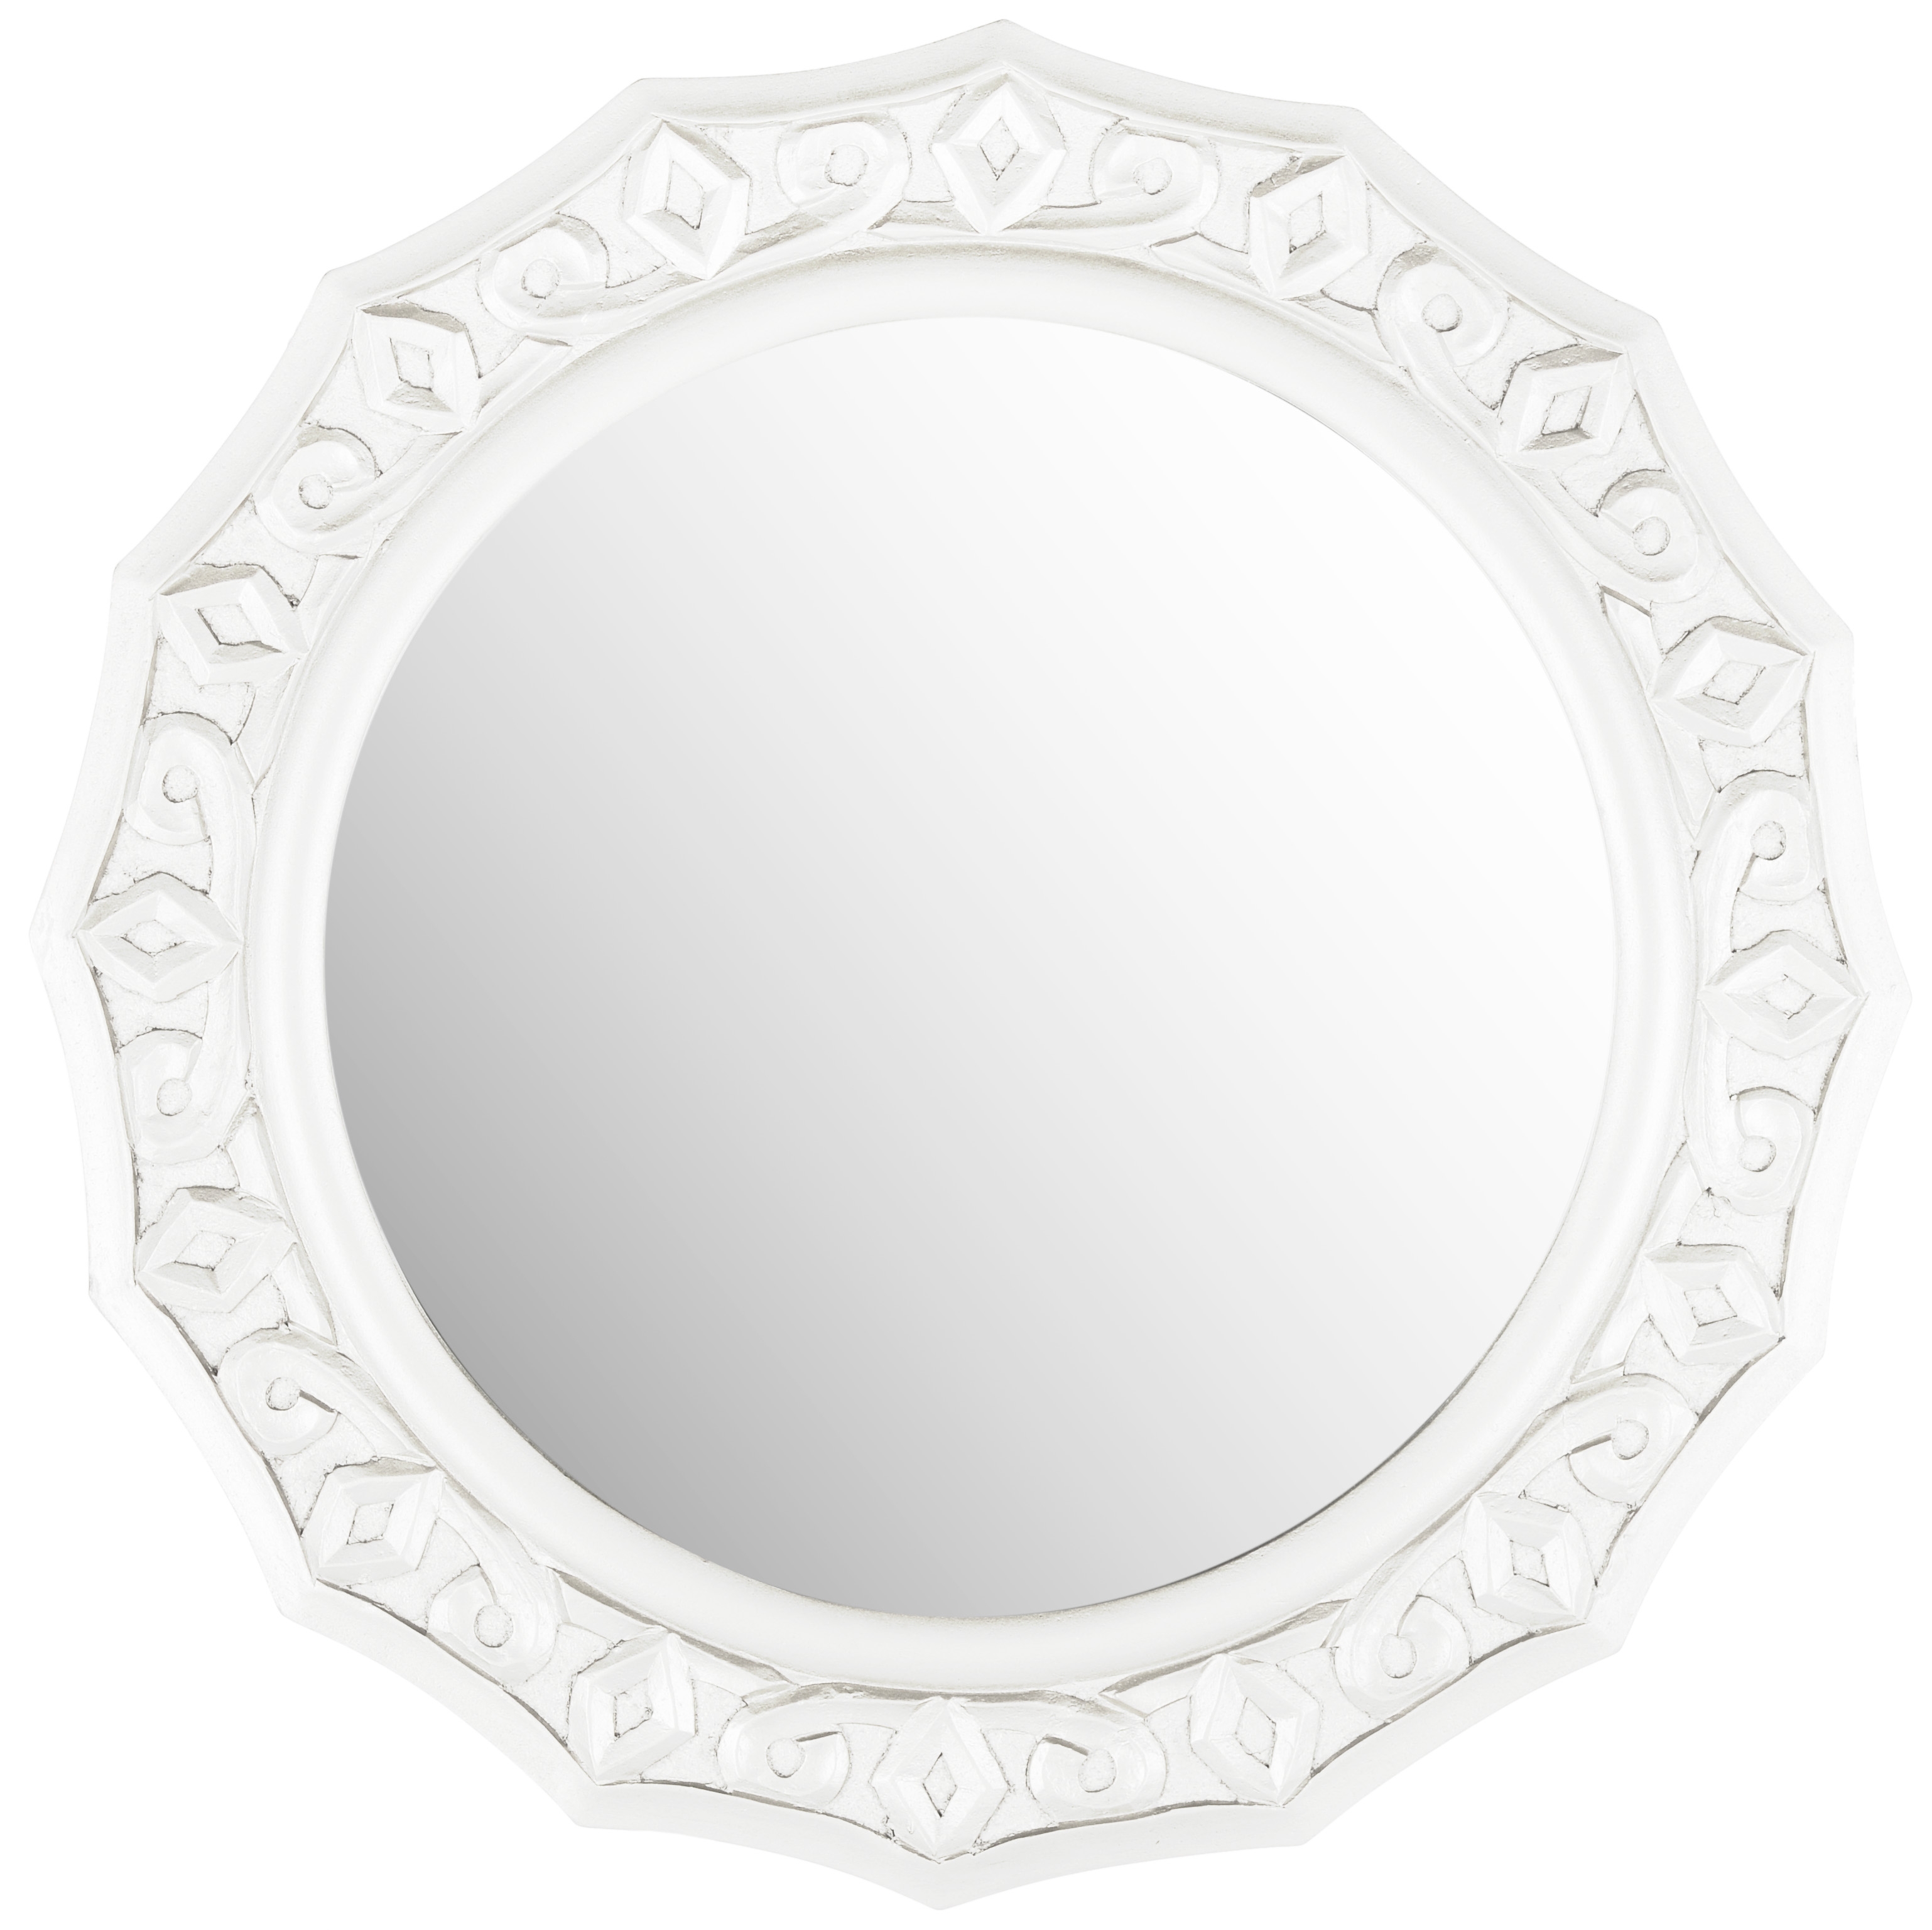 Gossamer Lace Mirror - White - Arlo Home - Image 0